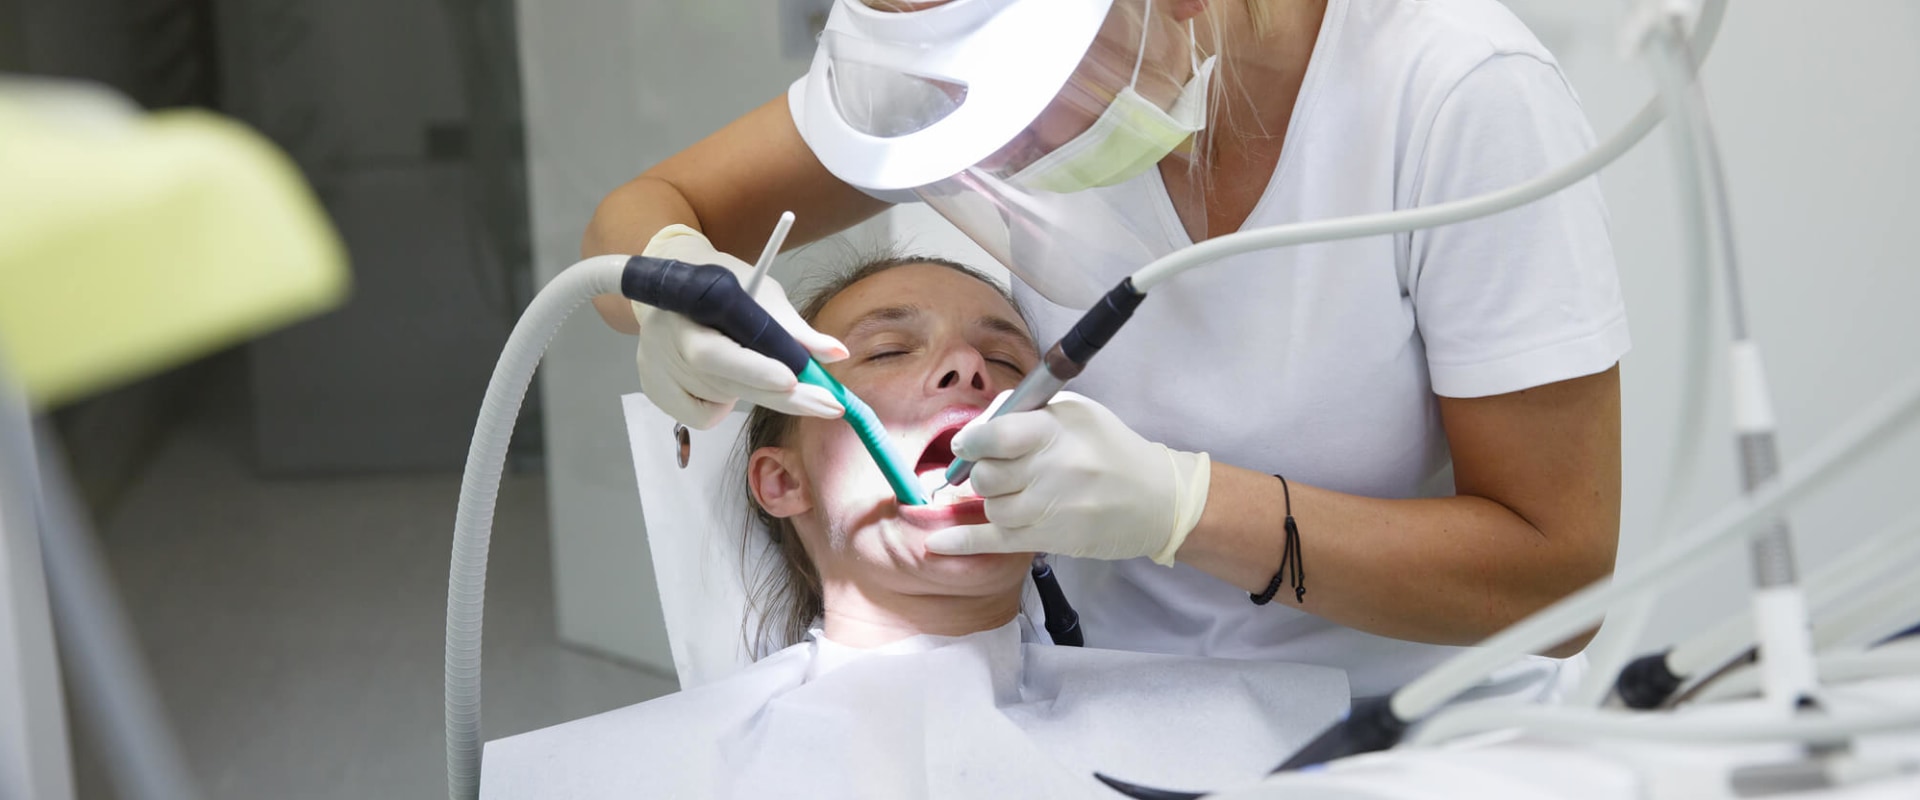 What procedures do endodontist perform?